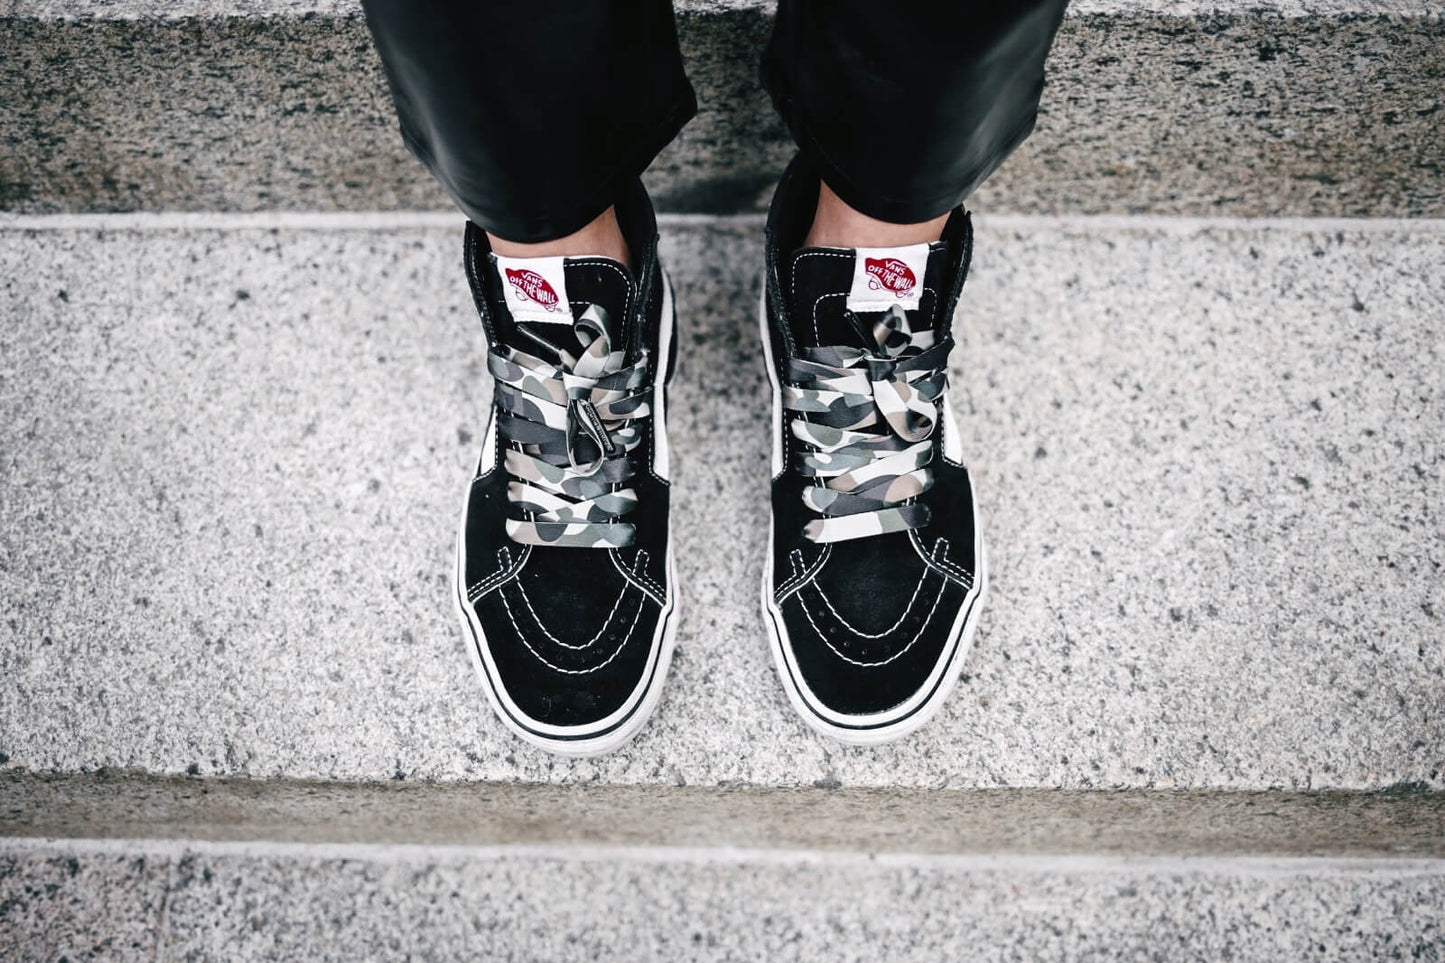 Camouflage shoelaces - The Shoelace Brand - Lisa Ankarman